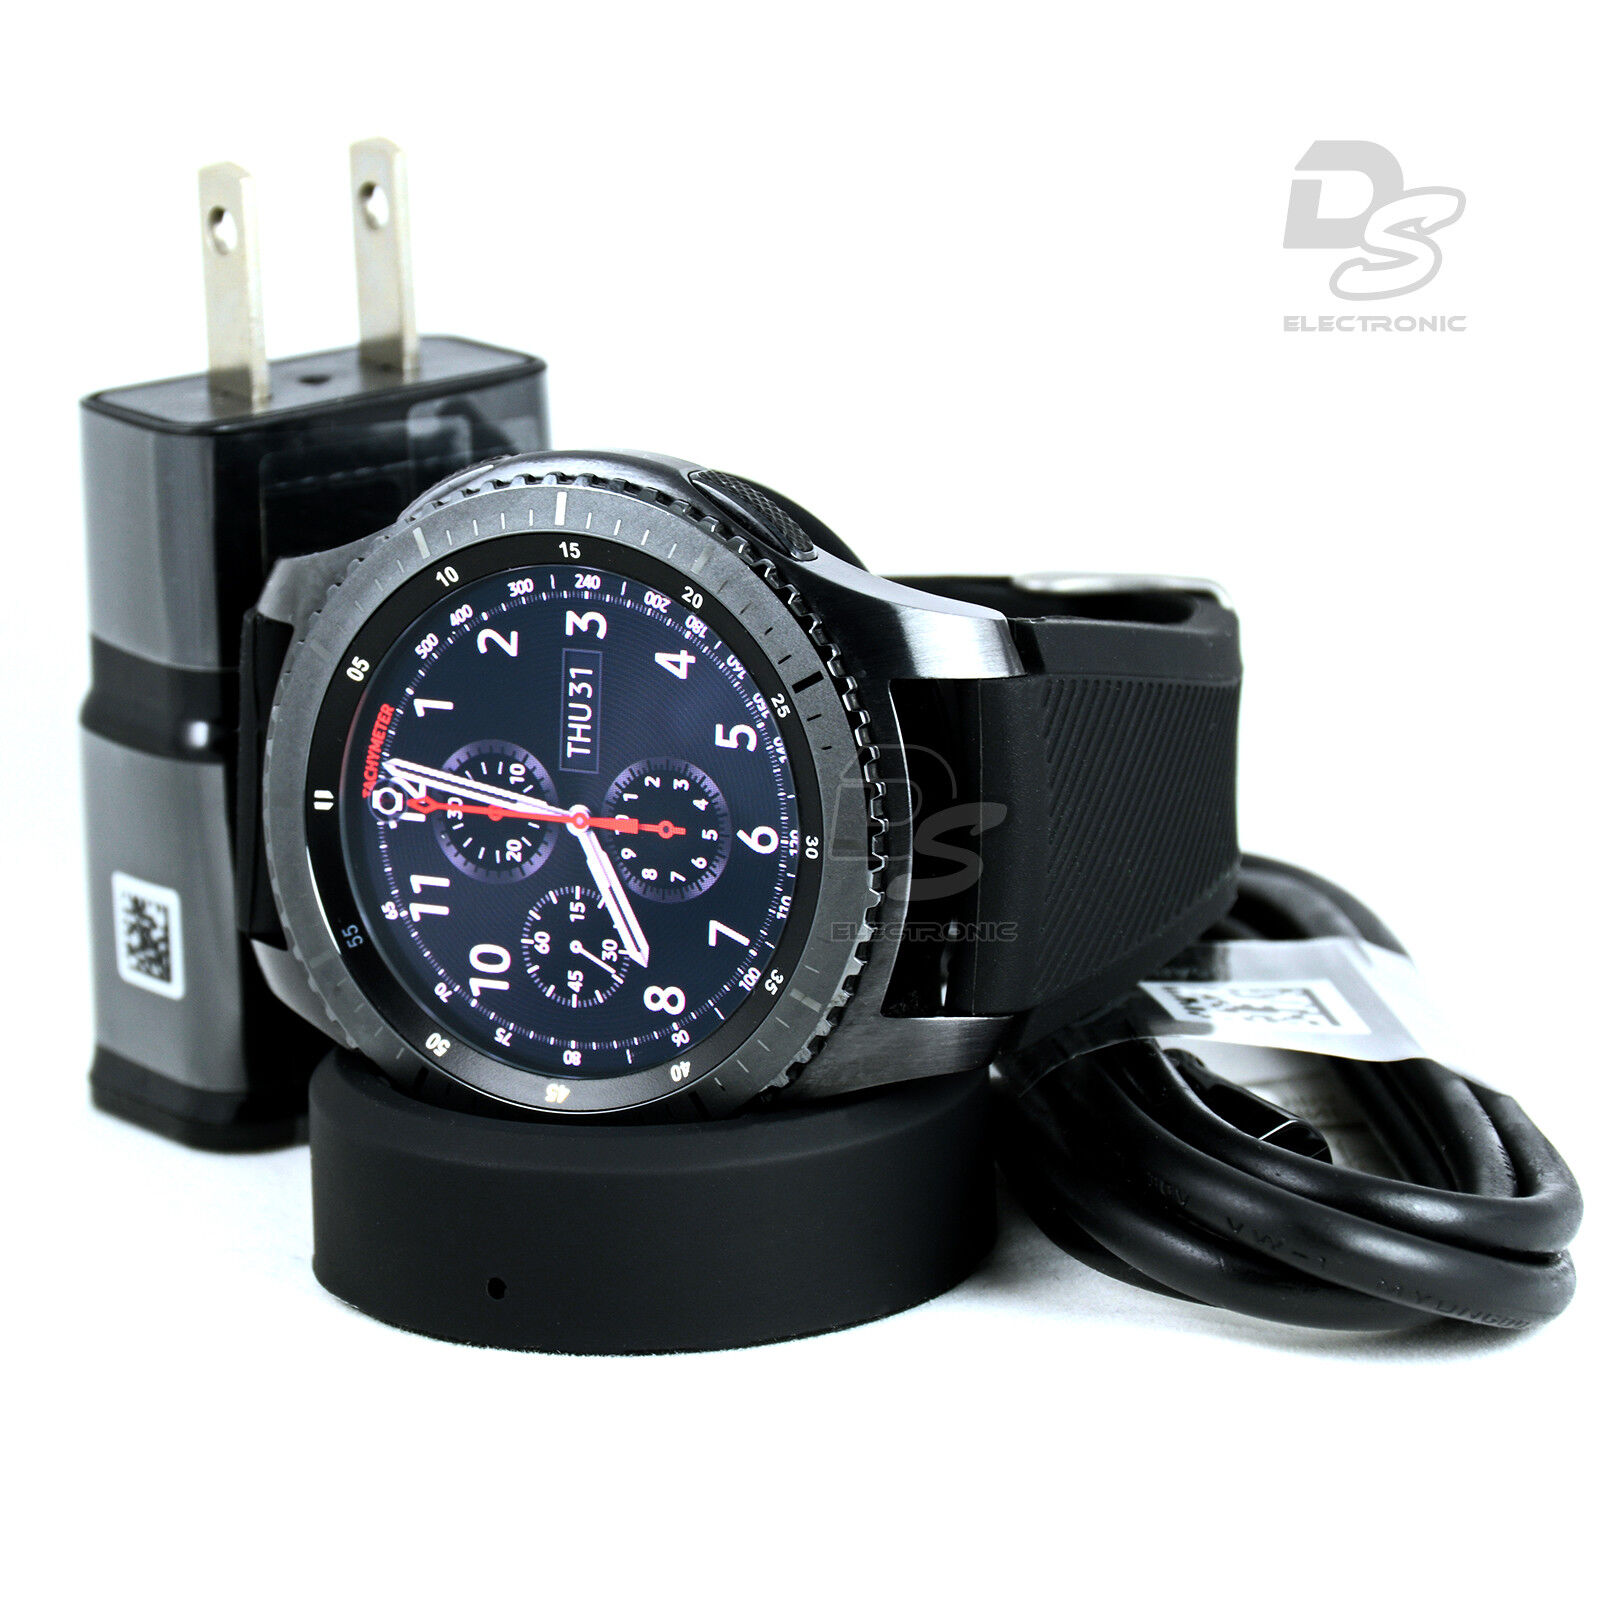 Samsung Gear S3 Frontier SM-R760 WIFI Bluetooth Smart Watch SM-R760NDAAXAR -   10 - Samsung Gear S3 Frontier SM-R760 WIFI Bluetooth Smart Watch SM-R760NDAAXAR